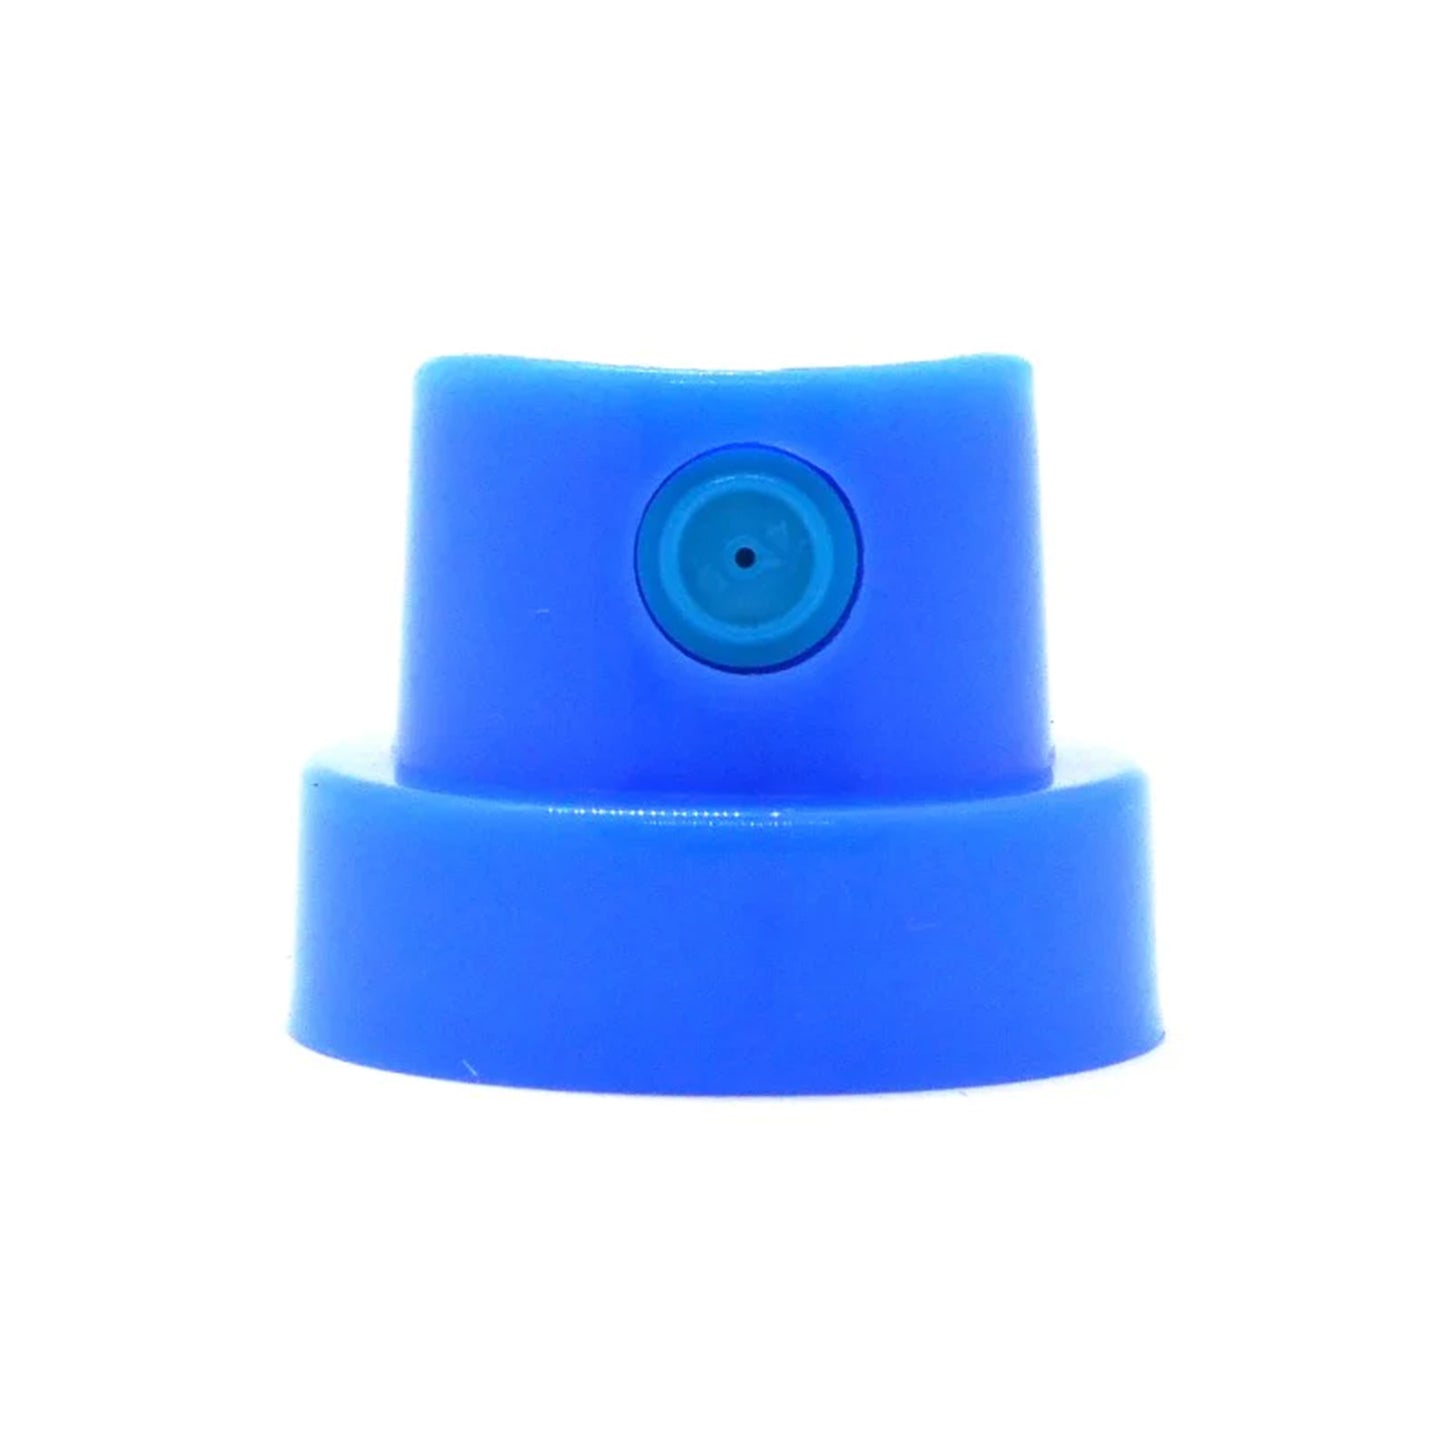 A bright blue spray paint cap